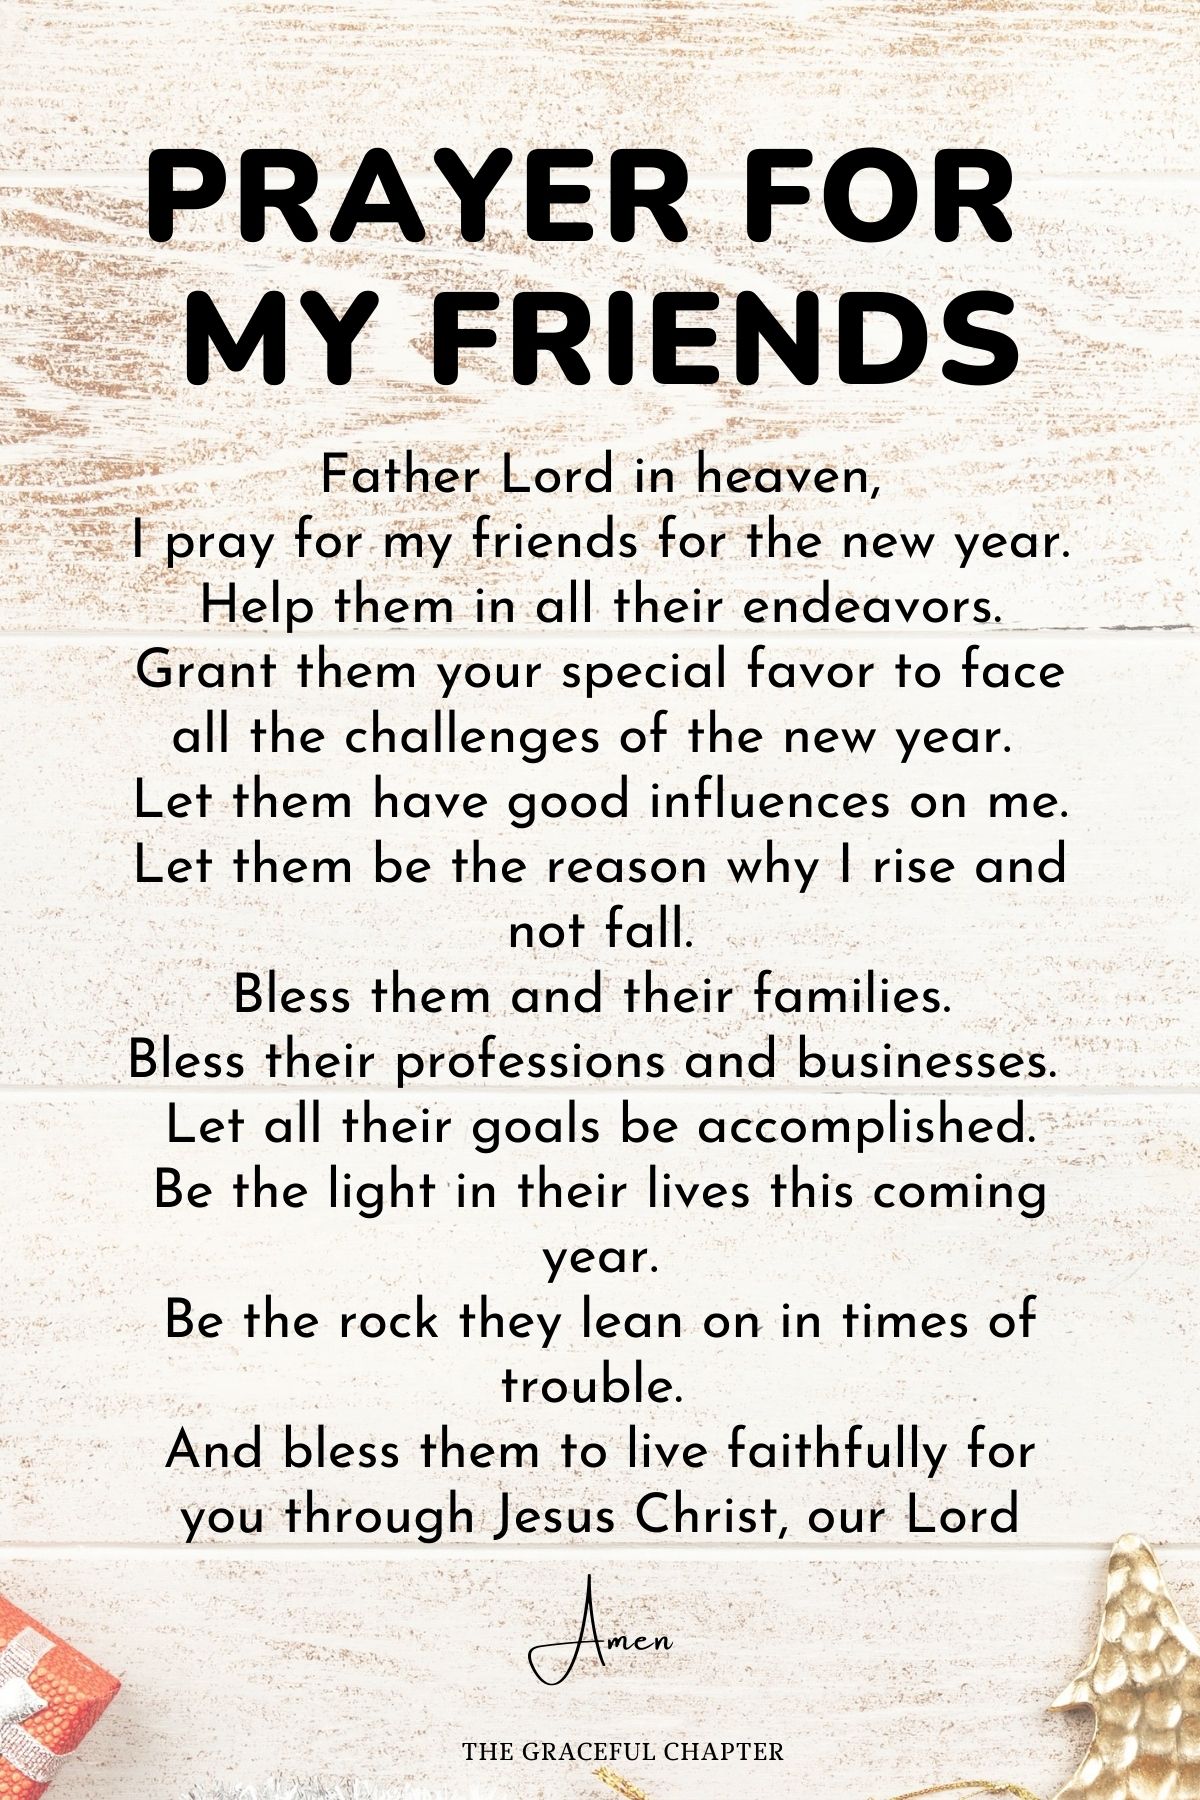 Prayer for Friends